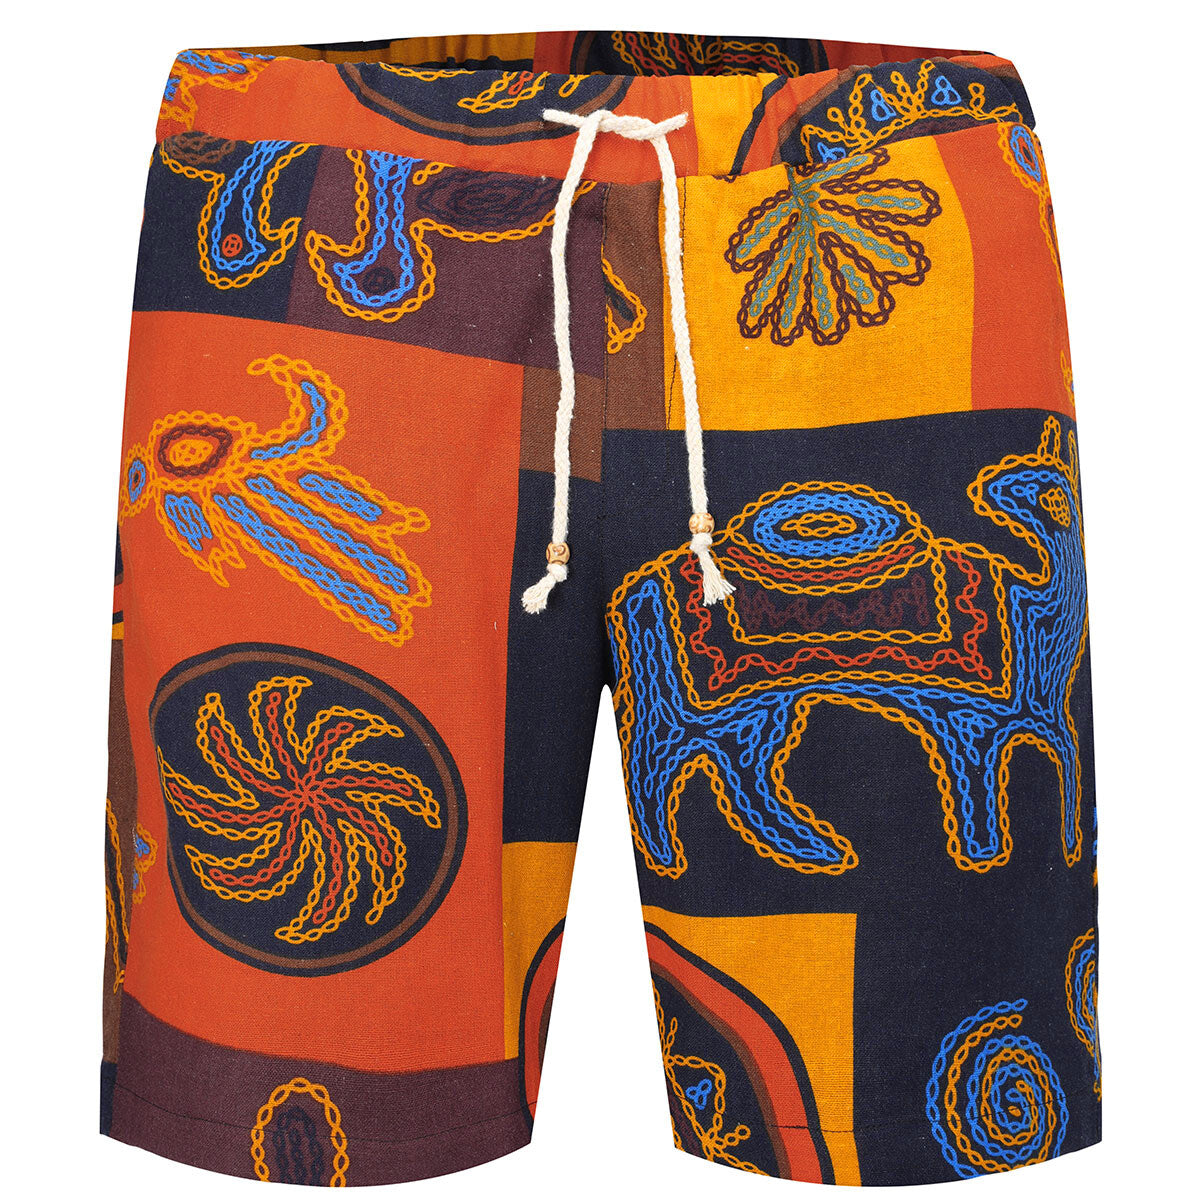 Egyptian Style Hawaii Summer 2-Piece Suit